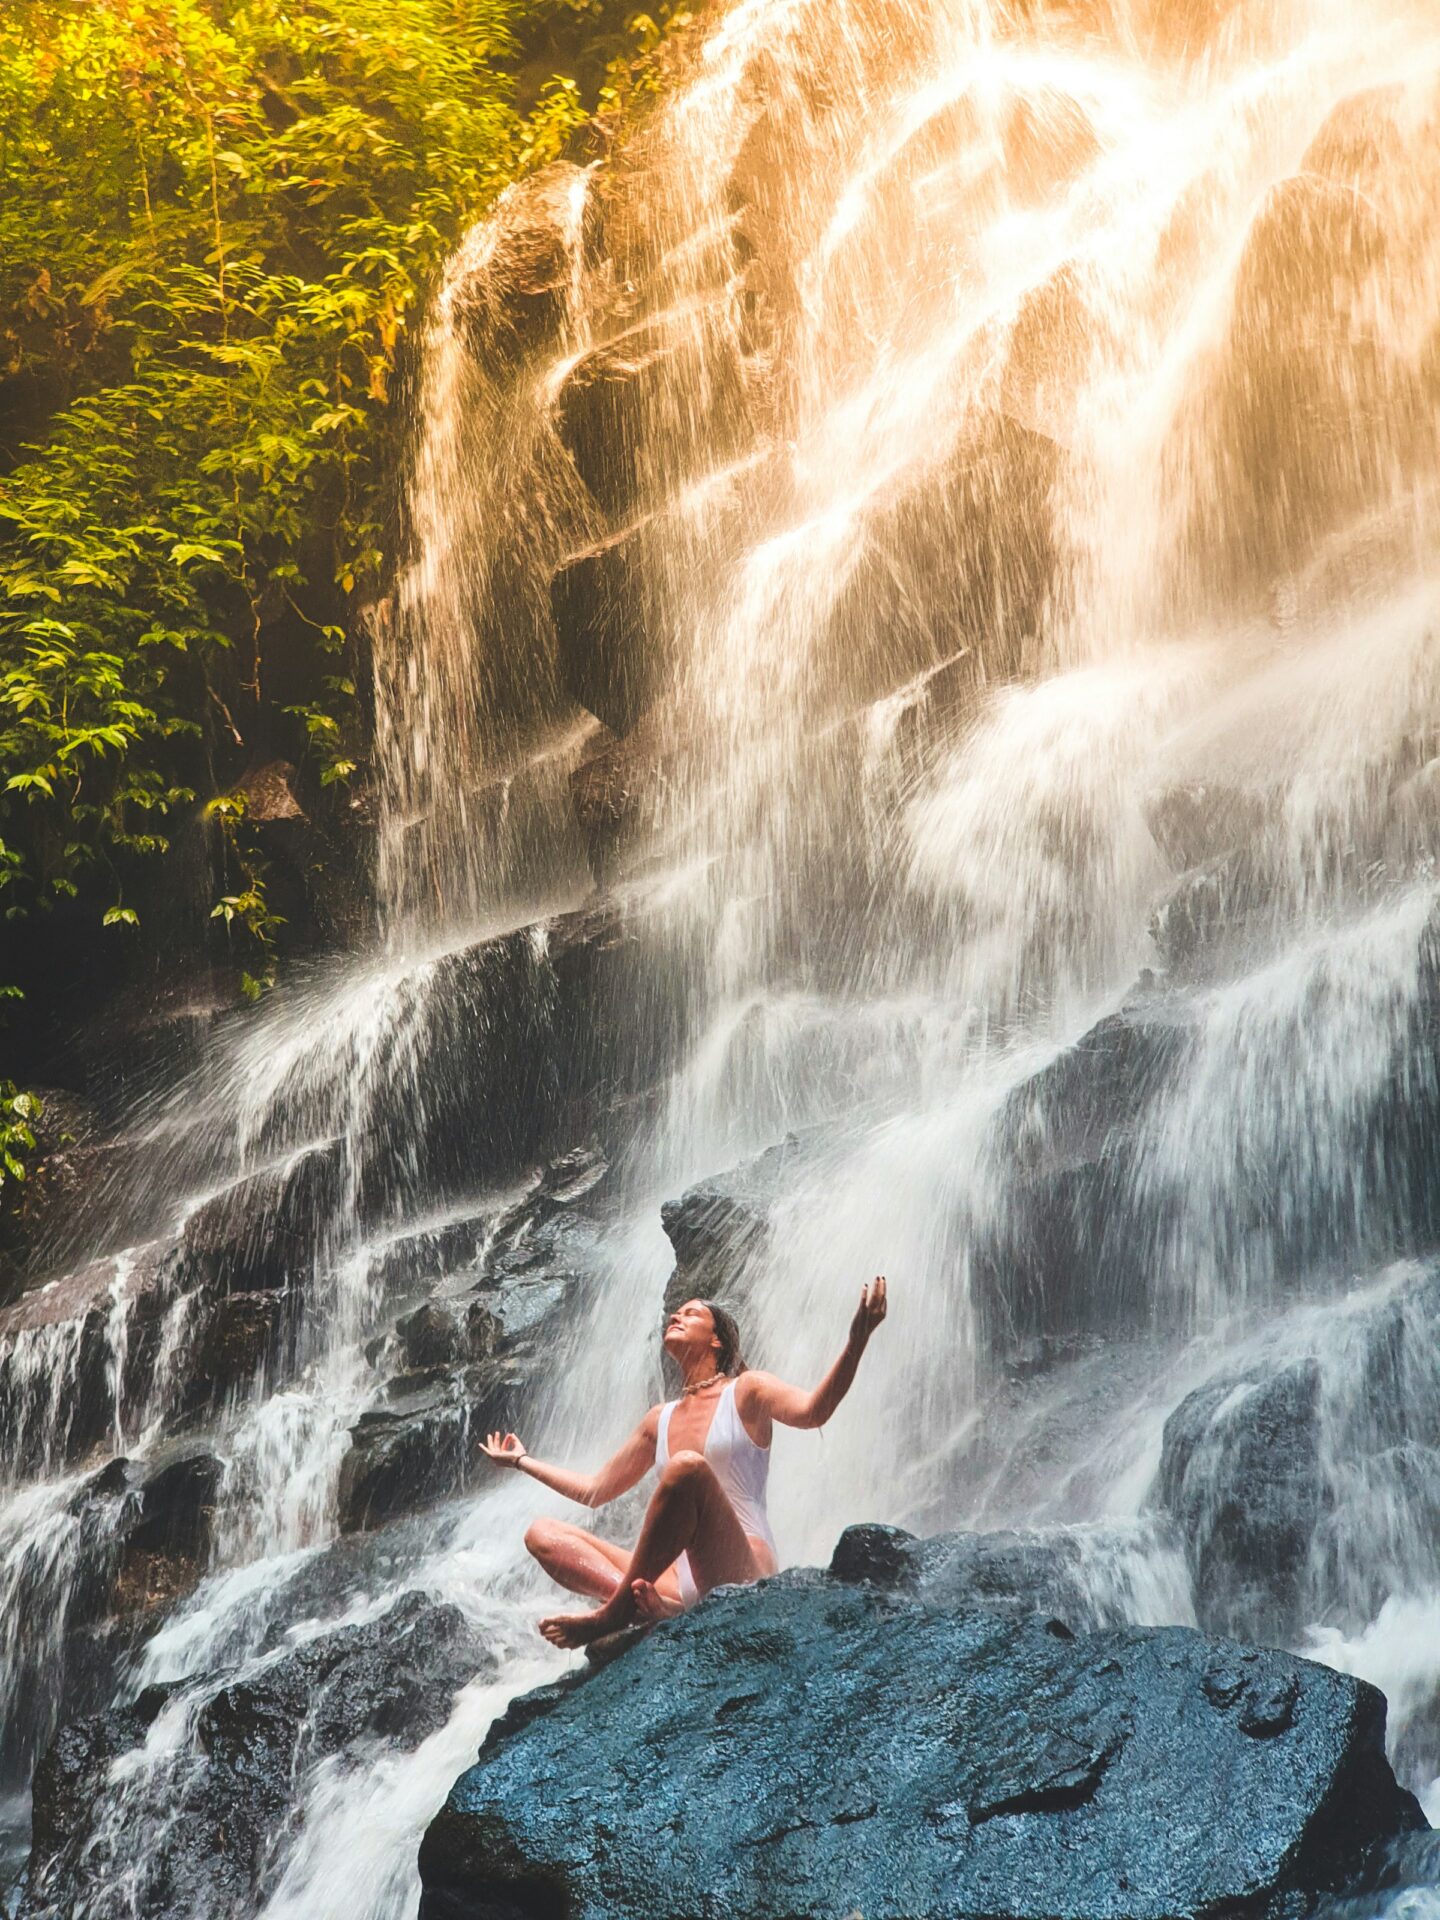 Kanto Lampo Waterfall in Bali